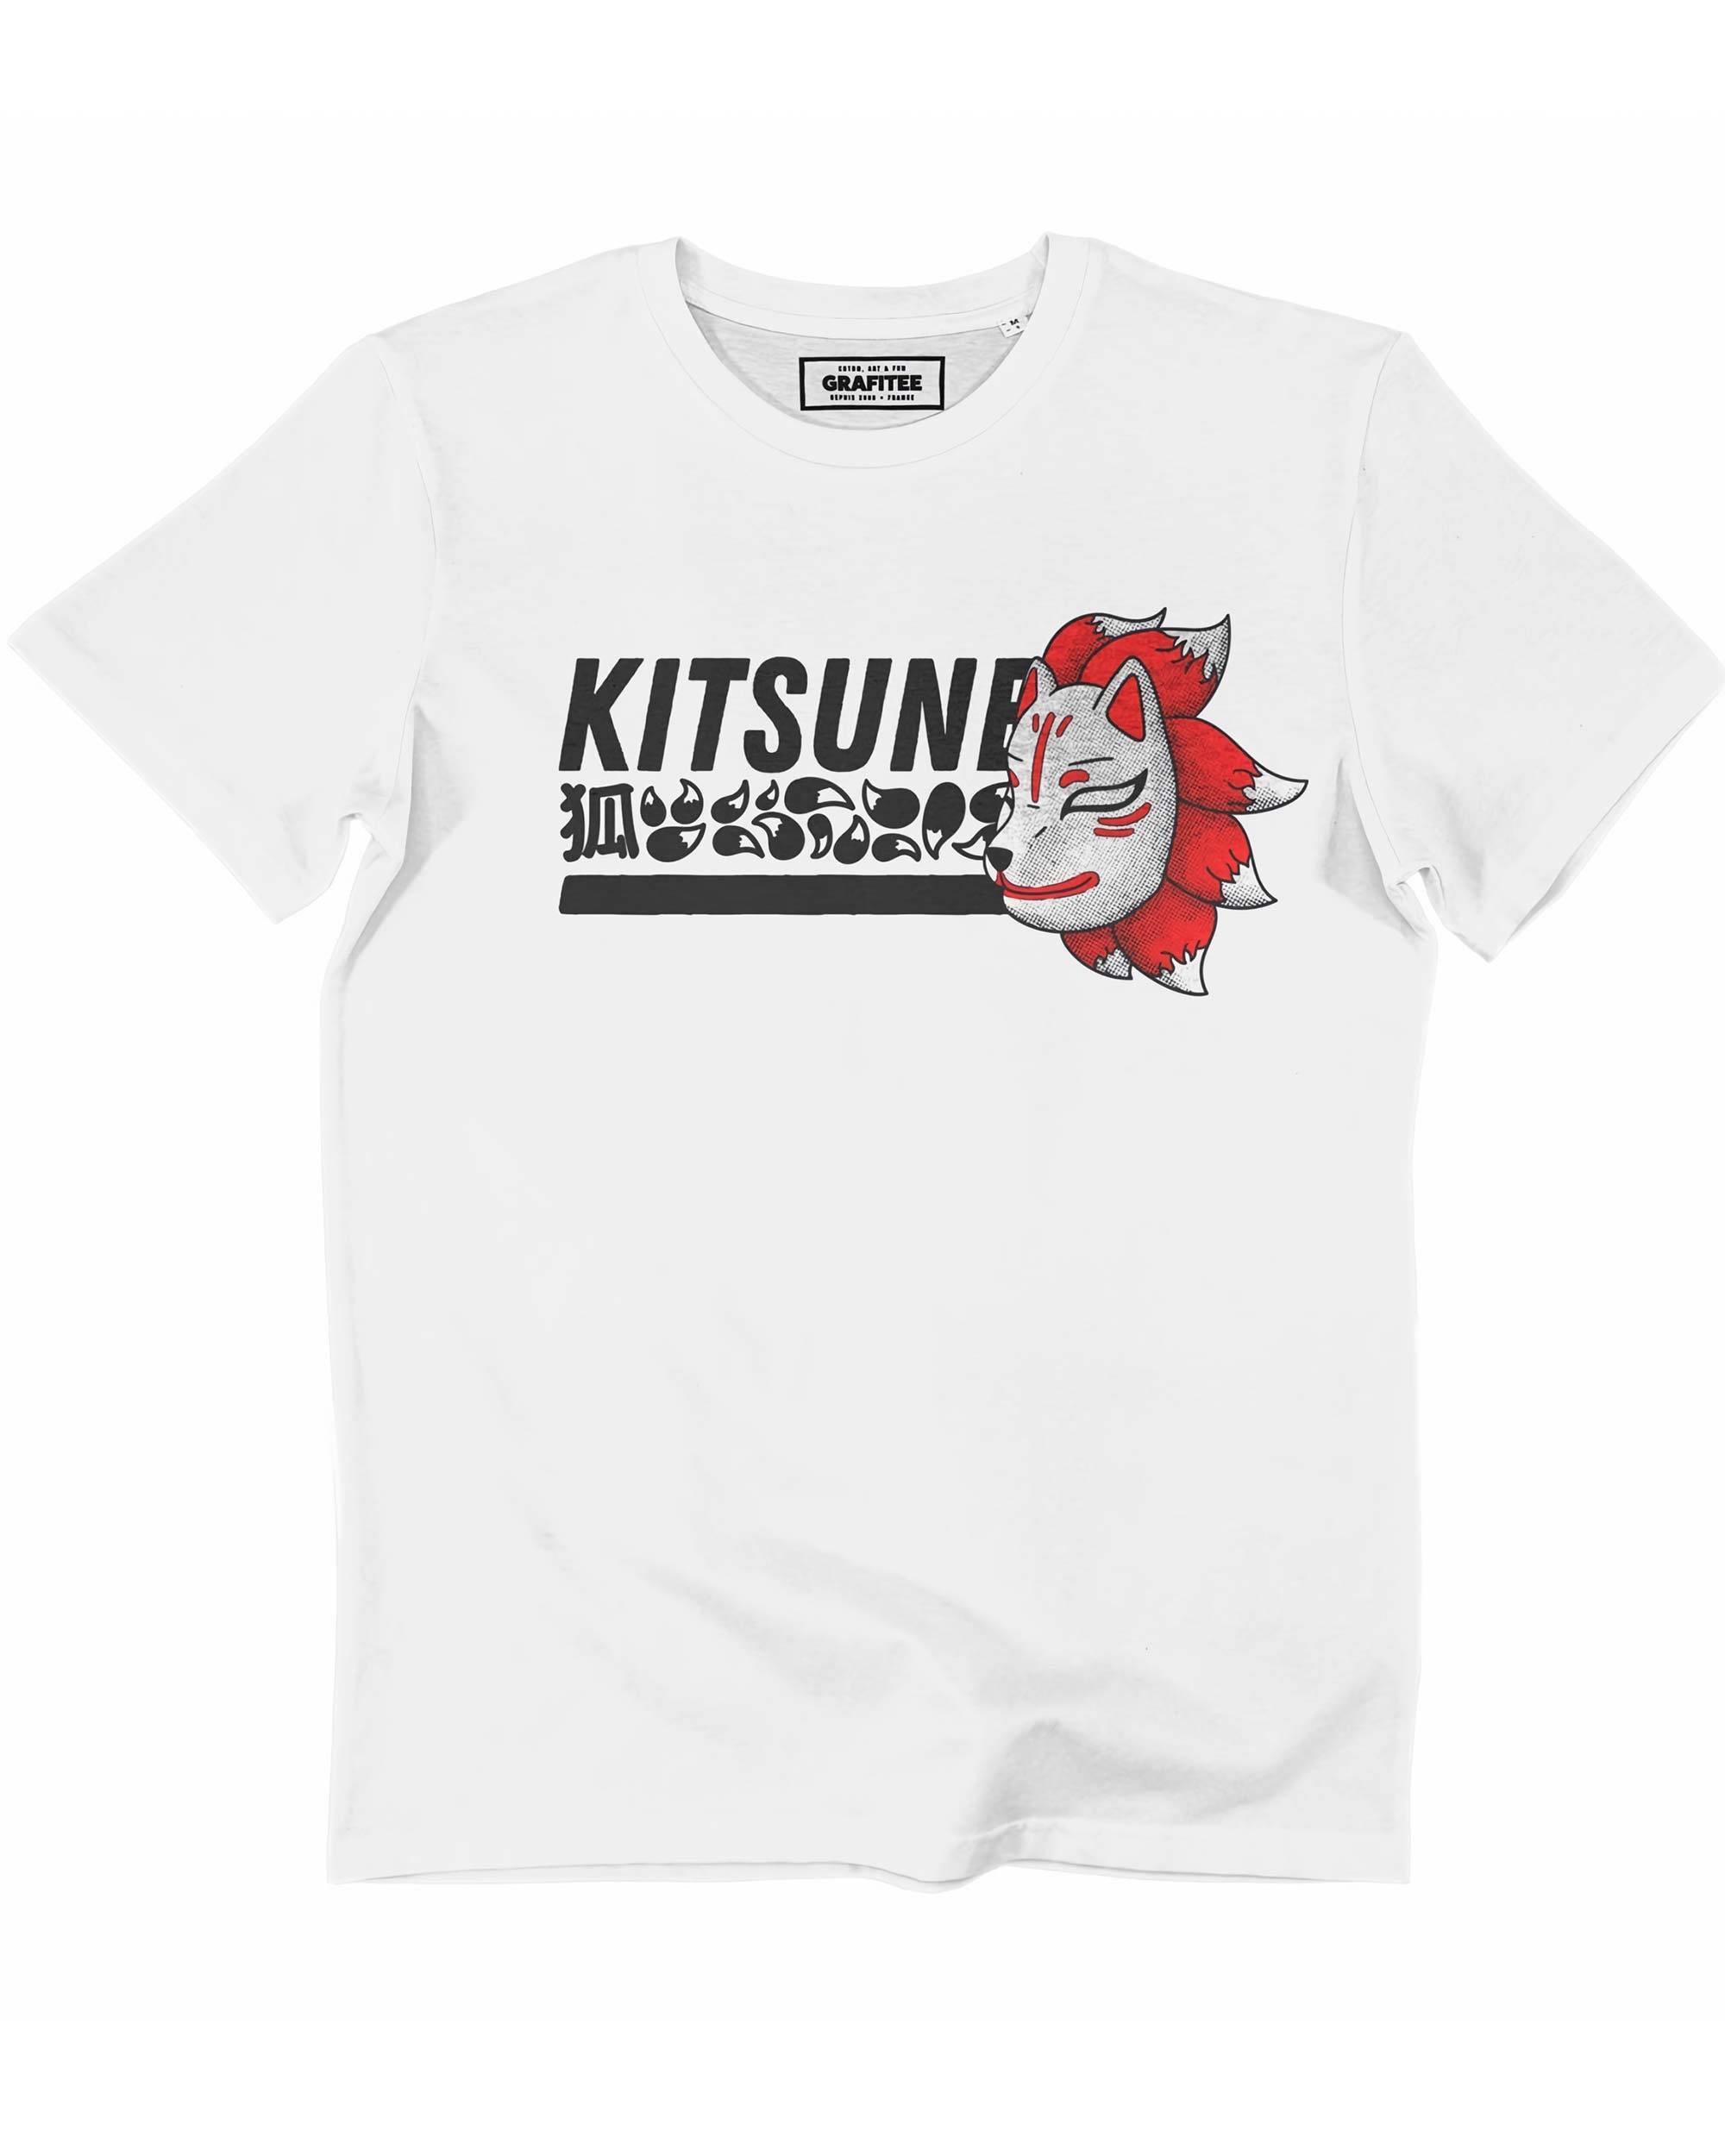 T-shirt Kitsune Grafitee